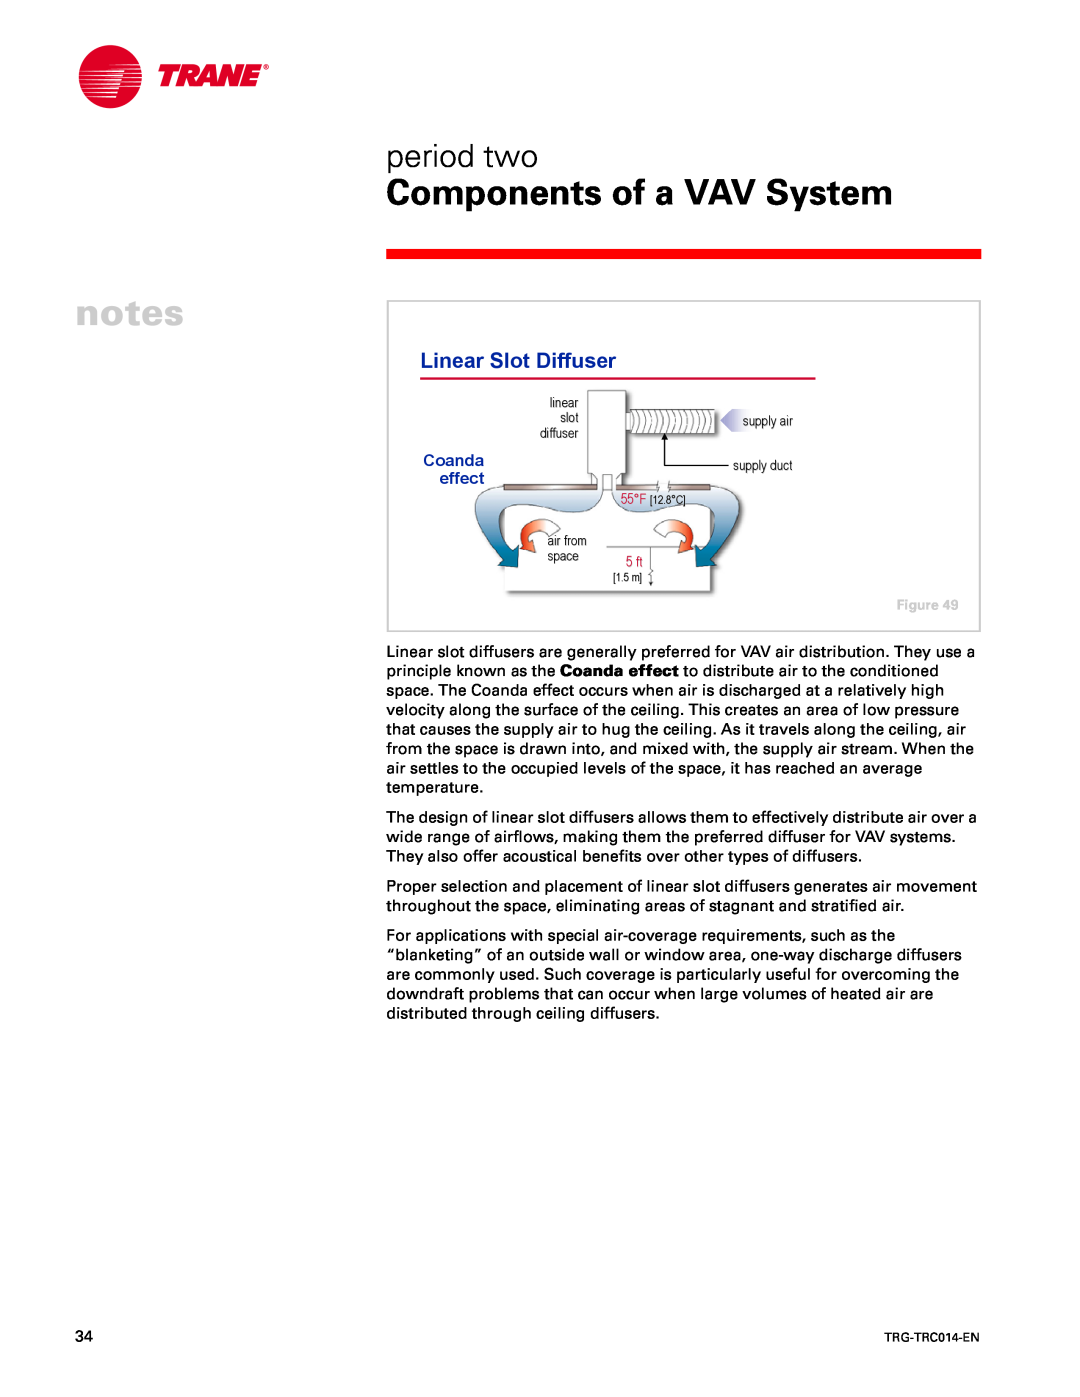 Trane TRG-TRC014-EN manual Linear Slot Diffuser, Components of a VAV System, period two, Coanda, effect 